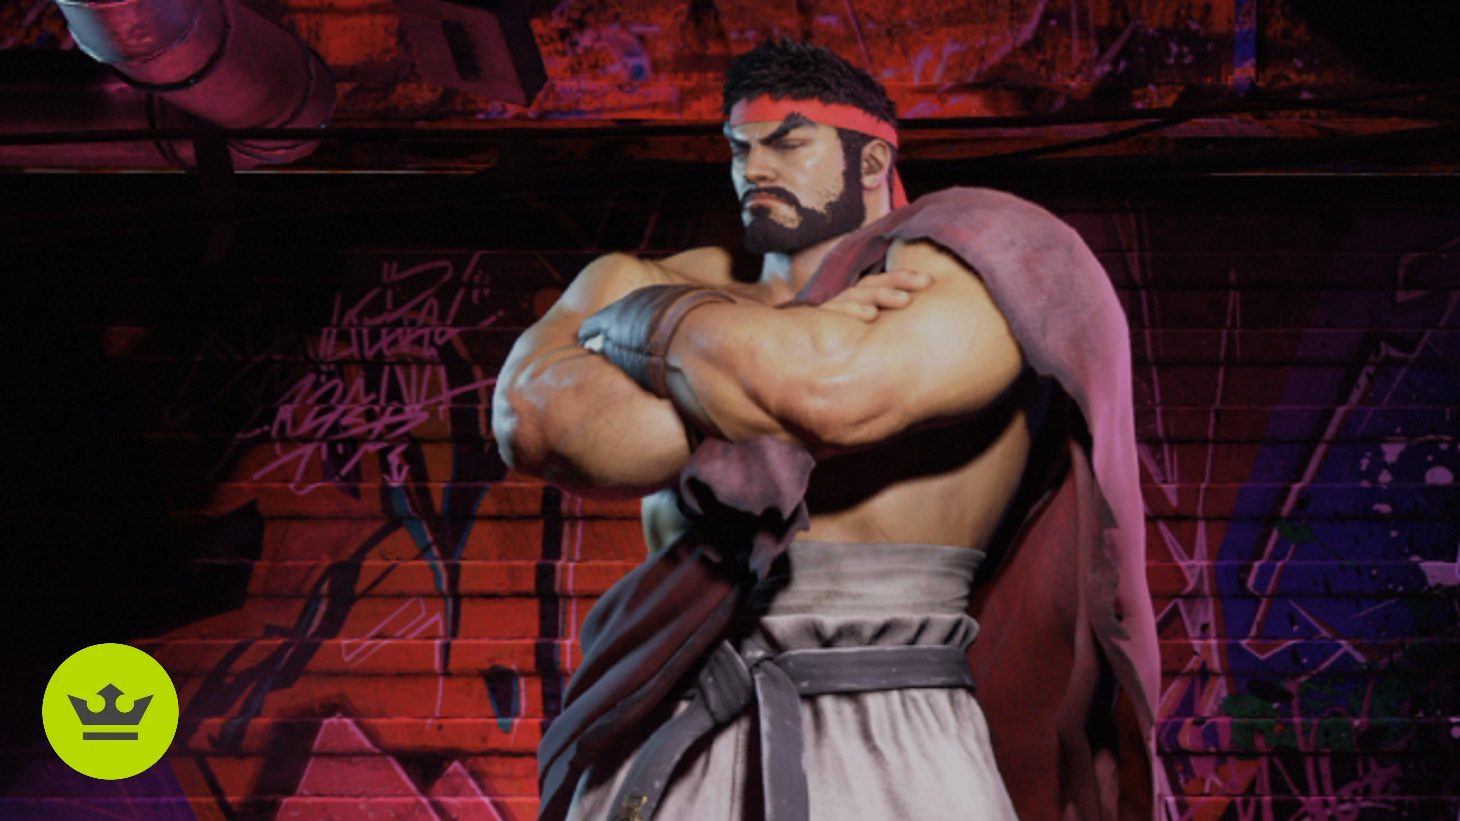 Lista de 6 niveles Street Fighter: se puede ver a Ryu